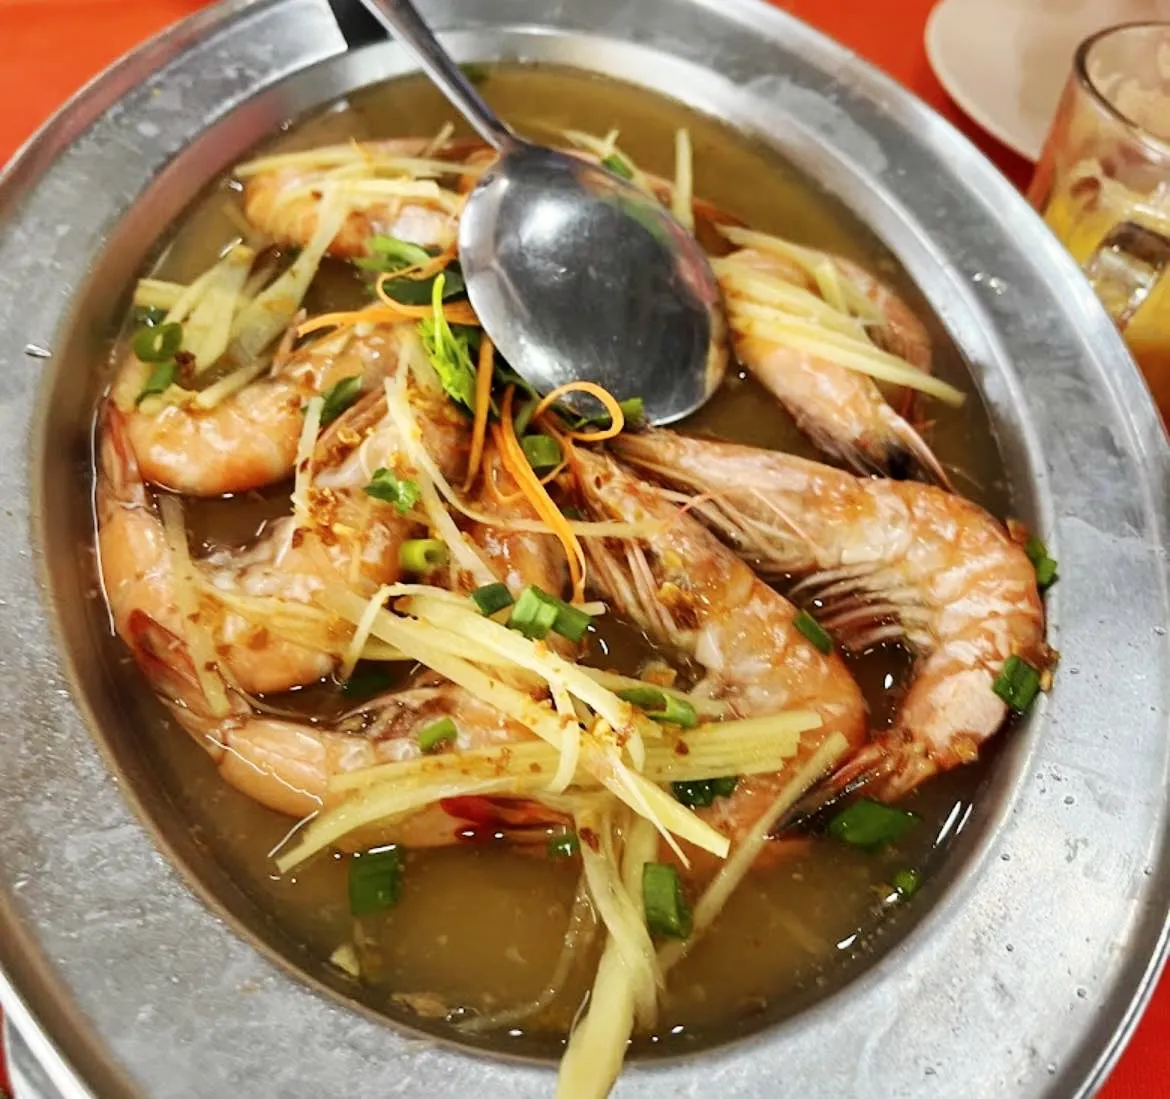 Yang Ming Seafood Restaurant, Kuala Selangor